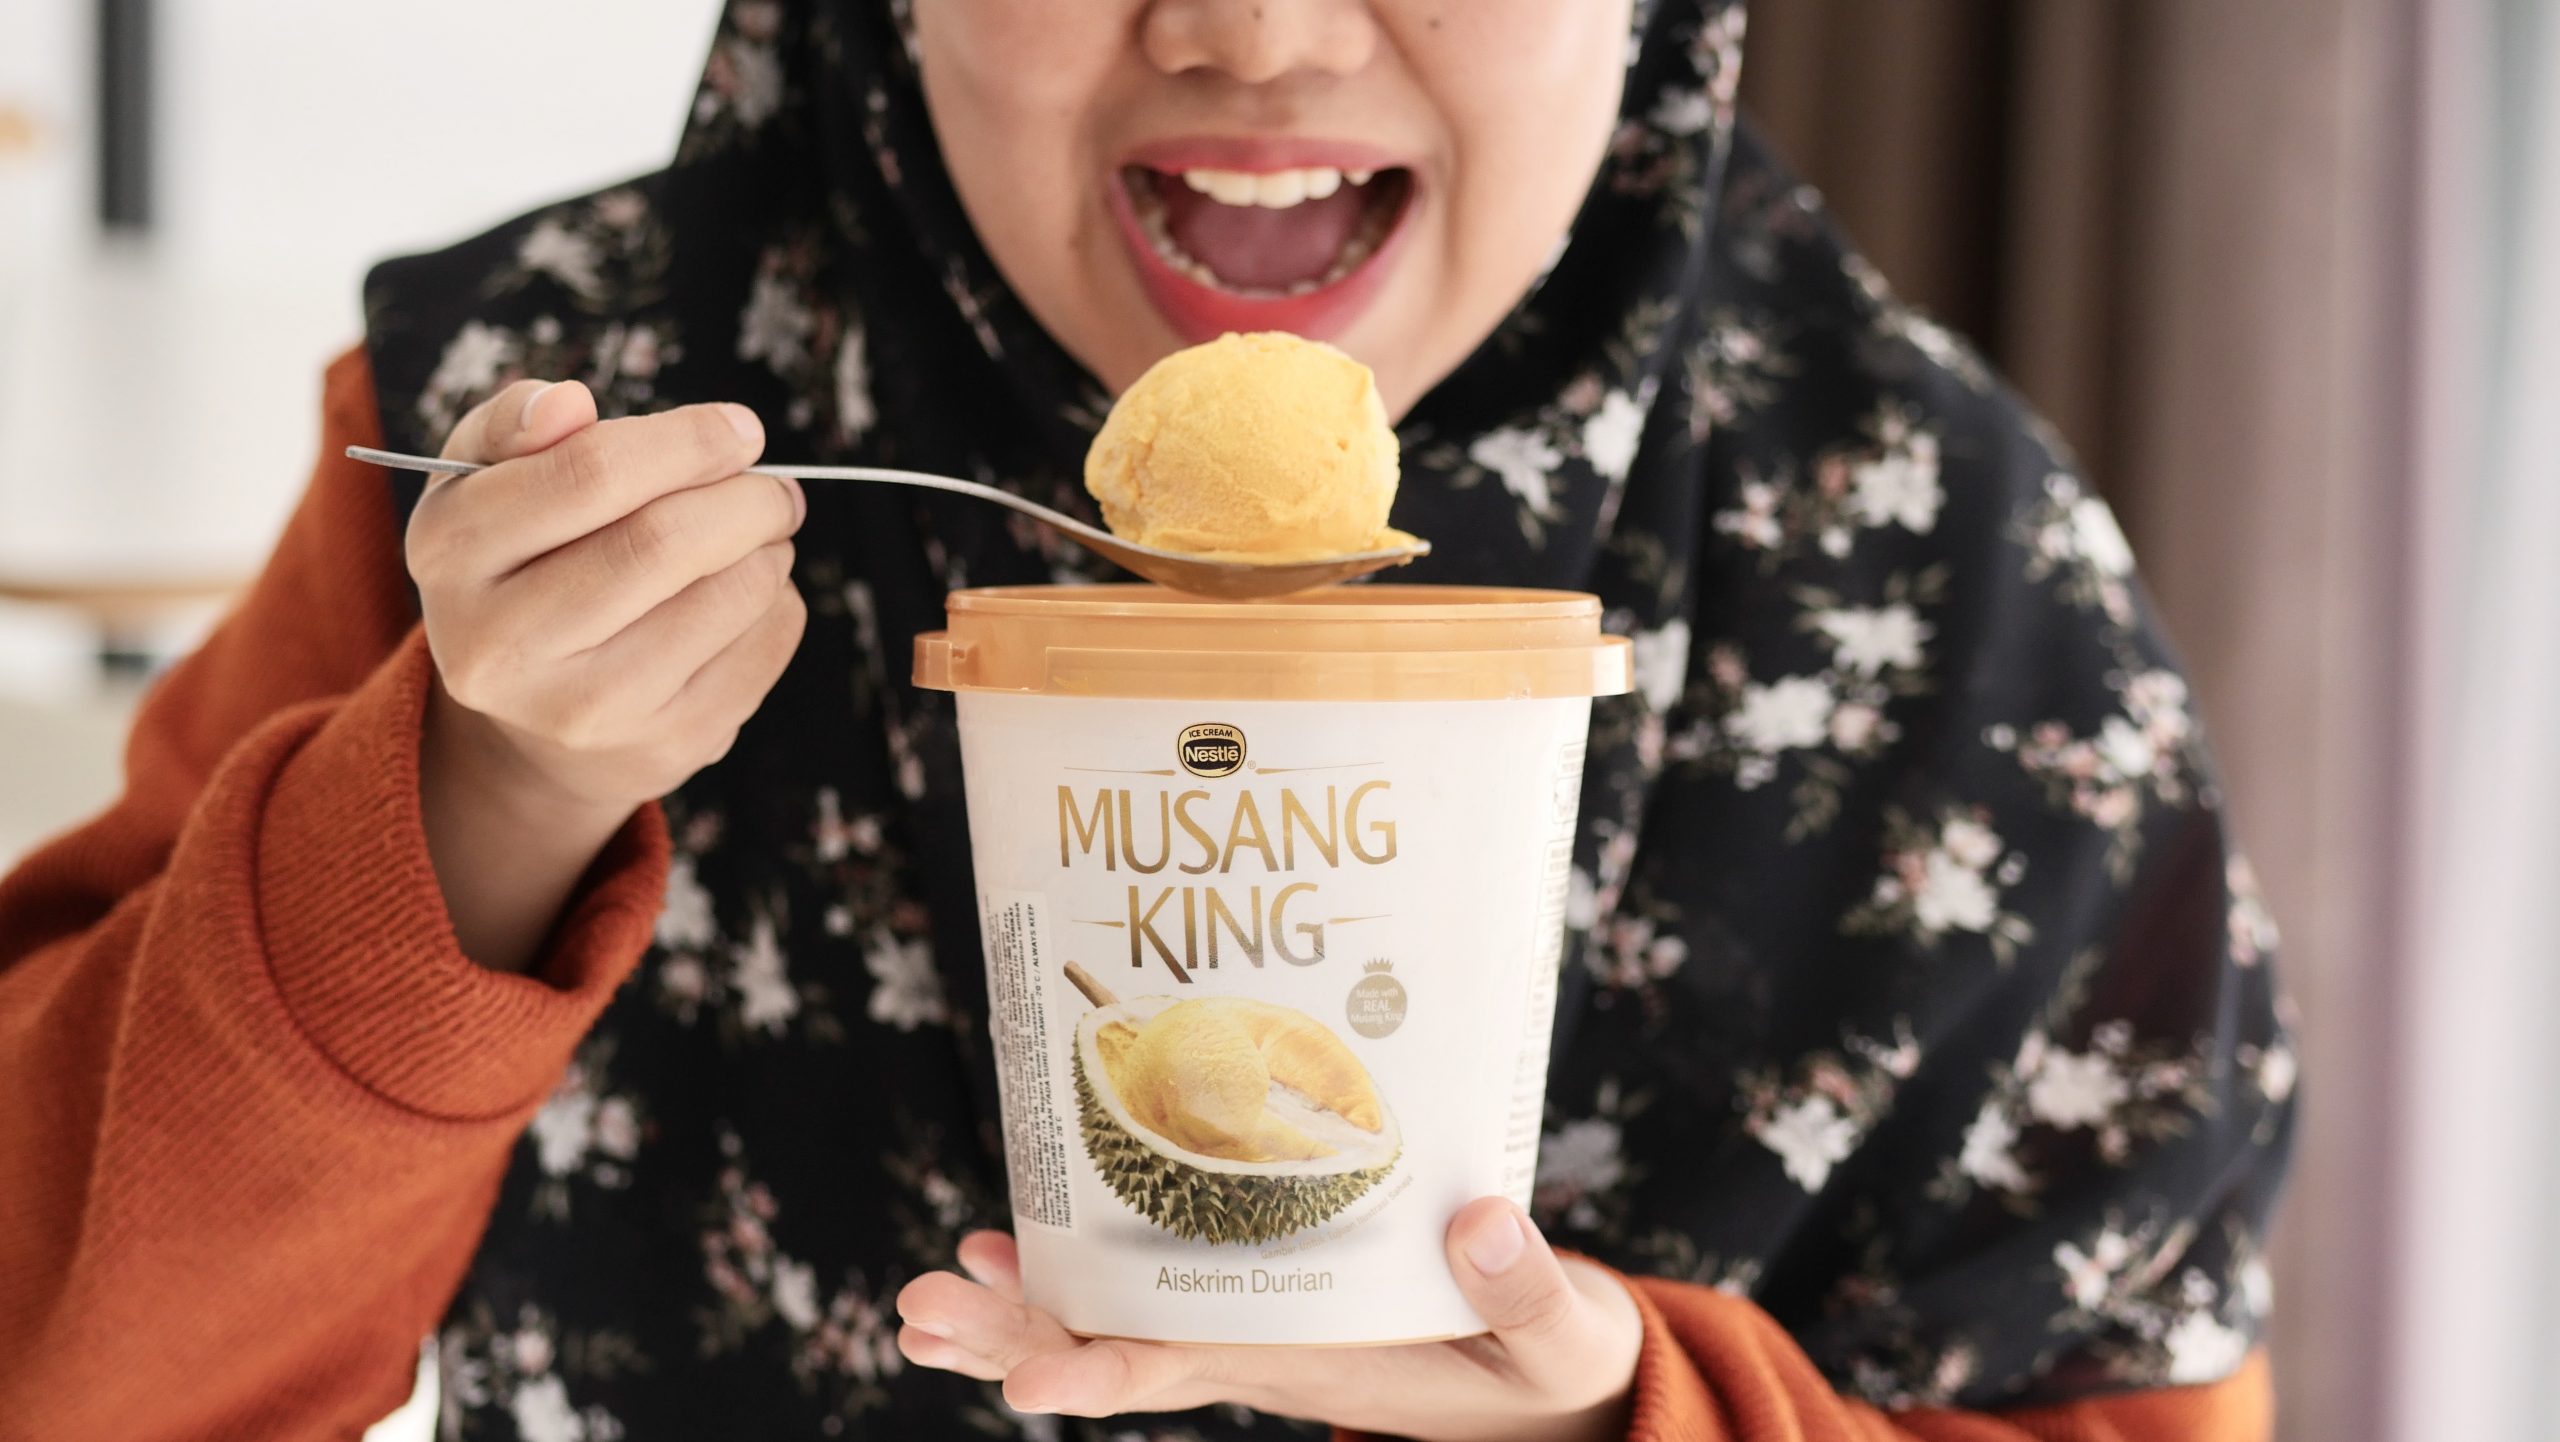 Musang price cream malaysia ice king nestle